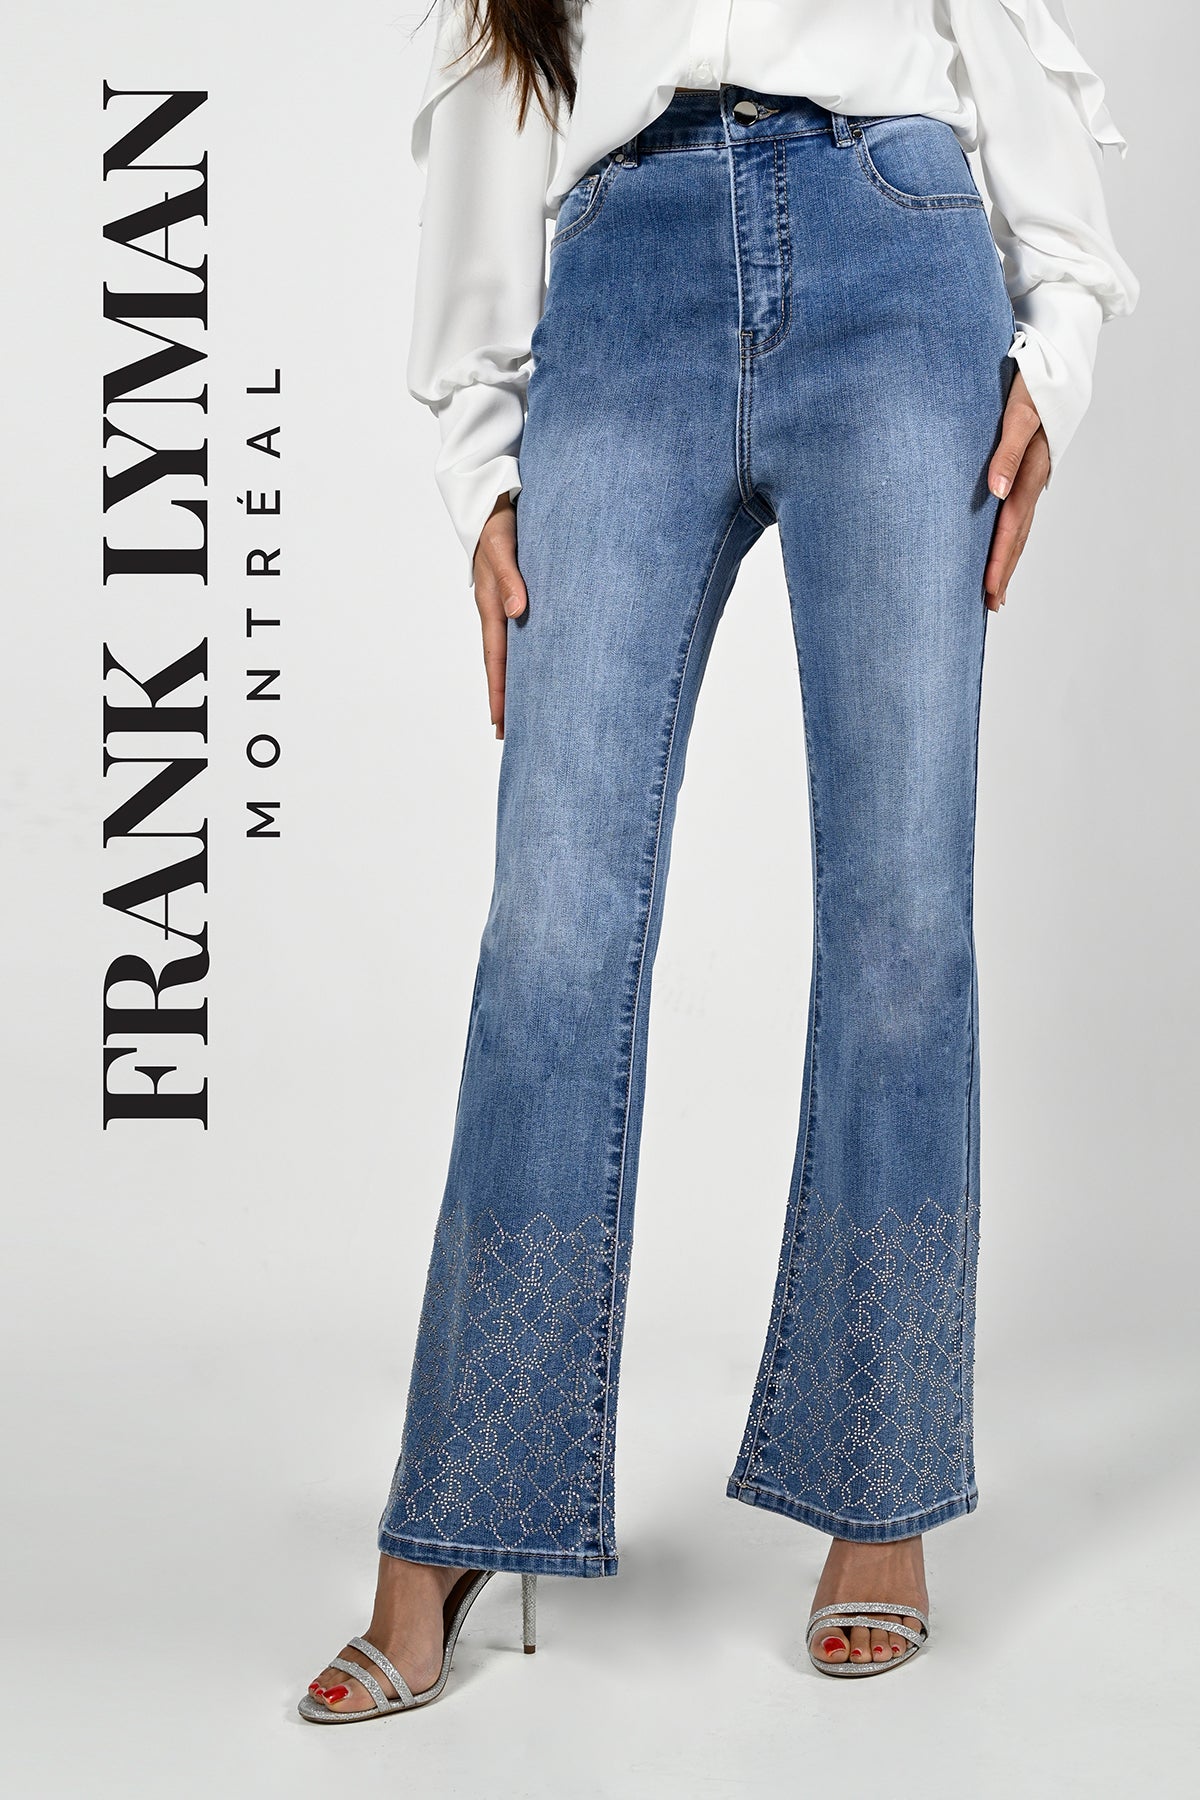 Frank Lyman Montreal Jeans-Frank Lyman Montreal Bootcut Jeans-Frank Lyman Montreal Online Denim Shop-Frank Lyman Montreal Fall 2022 Collection